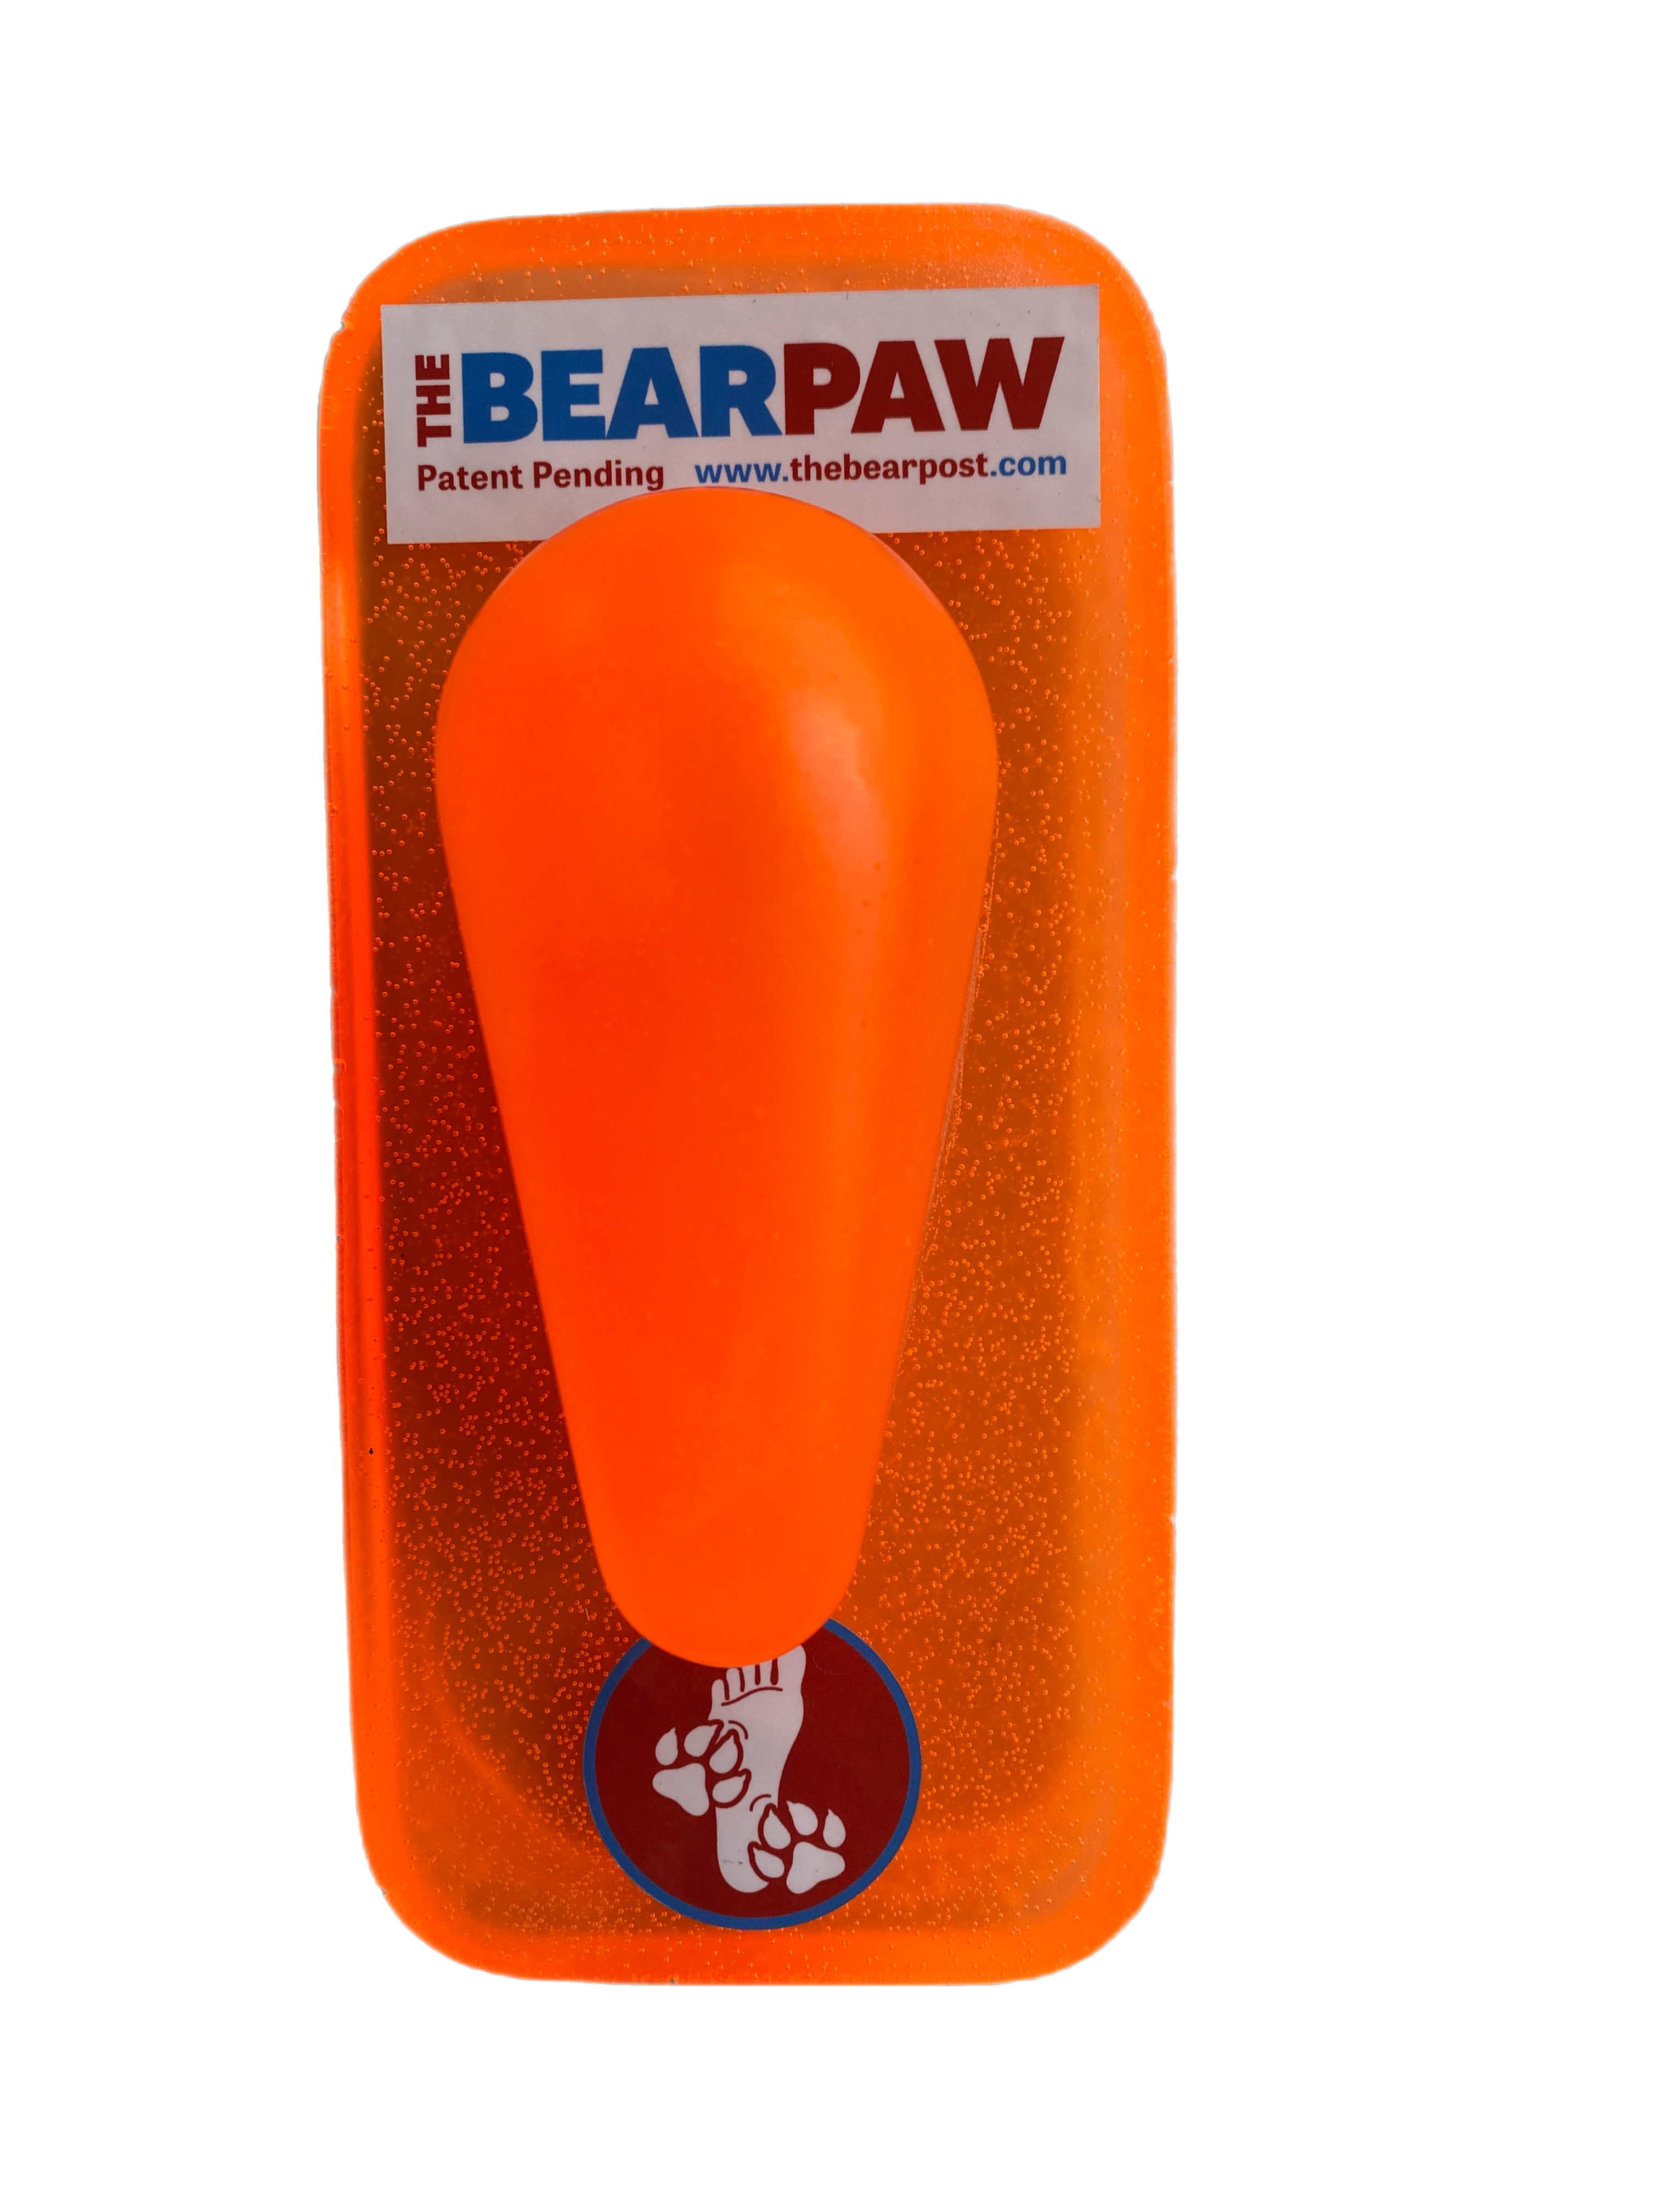 The Bear Paw